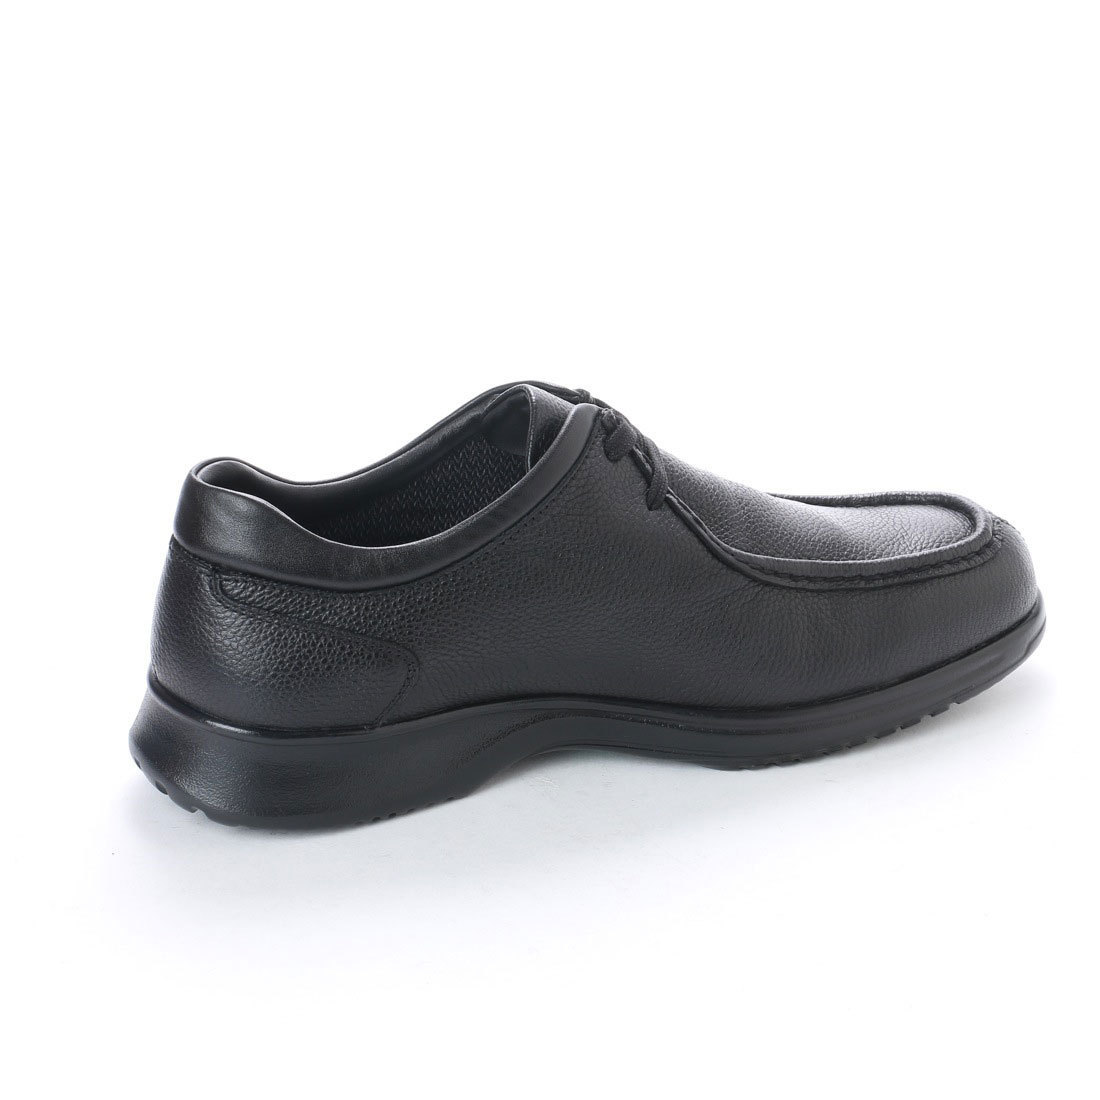 ^madras Walkma gong s walking casual shoes Gore-Tex MW8011 waterproof light brown light brown 25.0cm (0910010303-lb-s250)